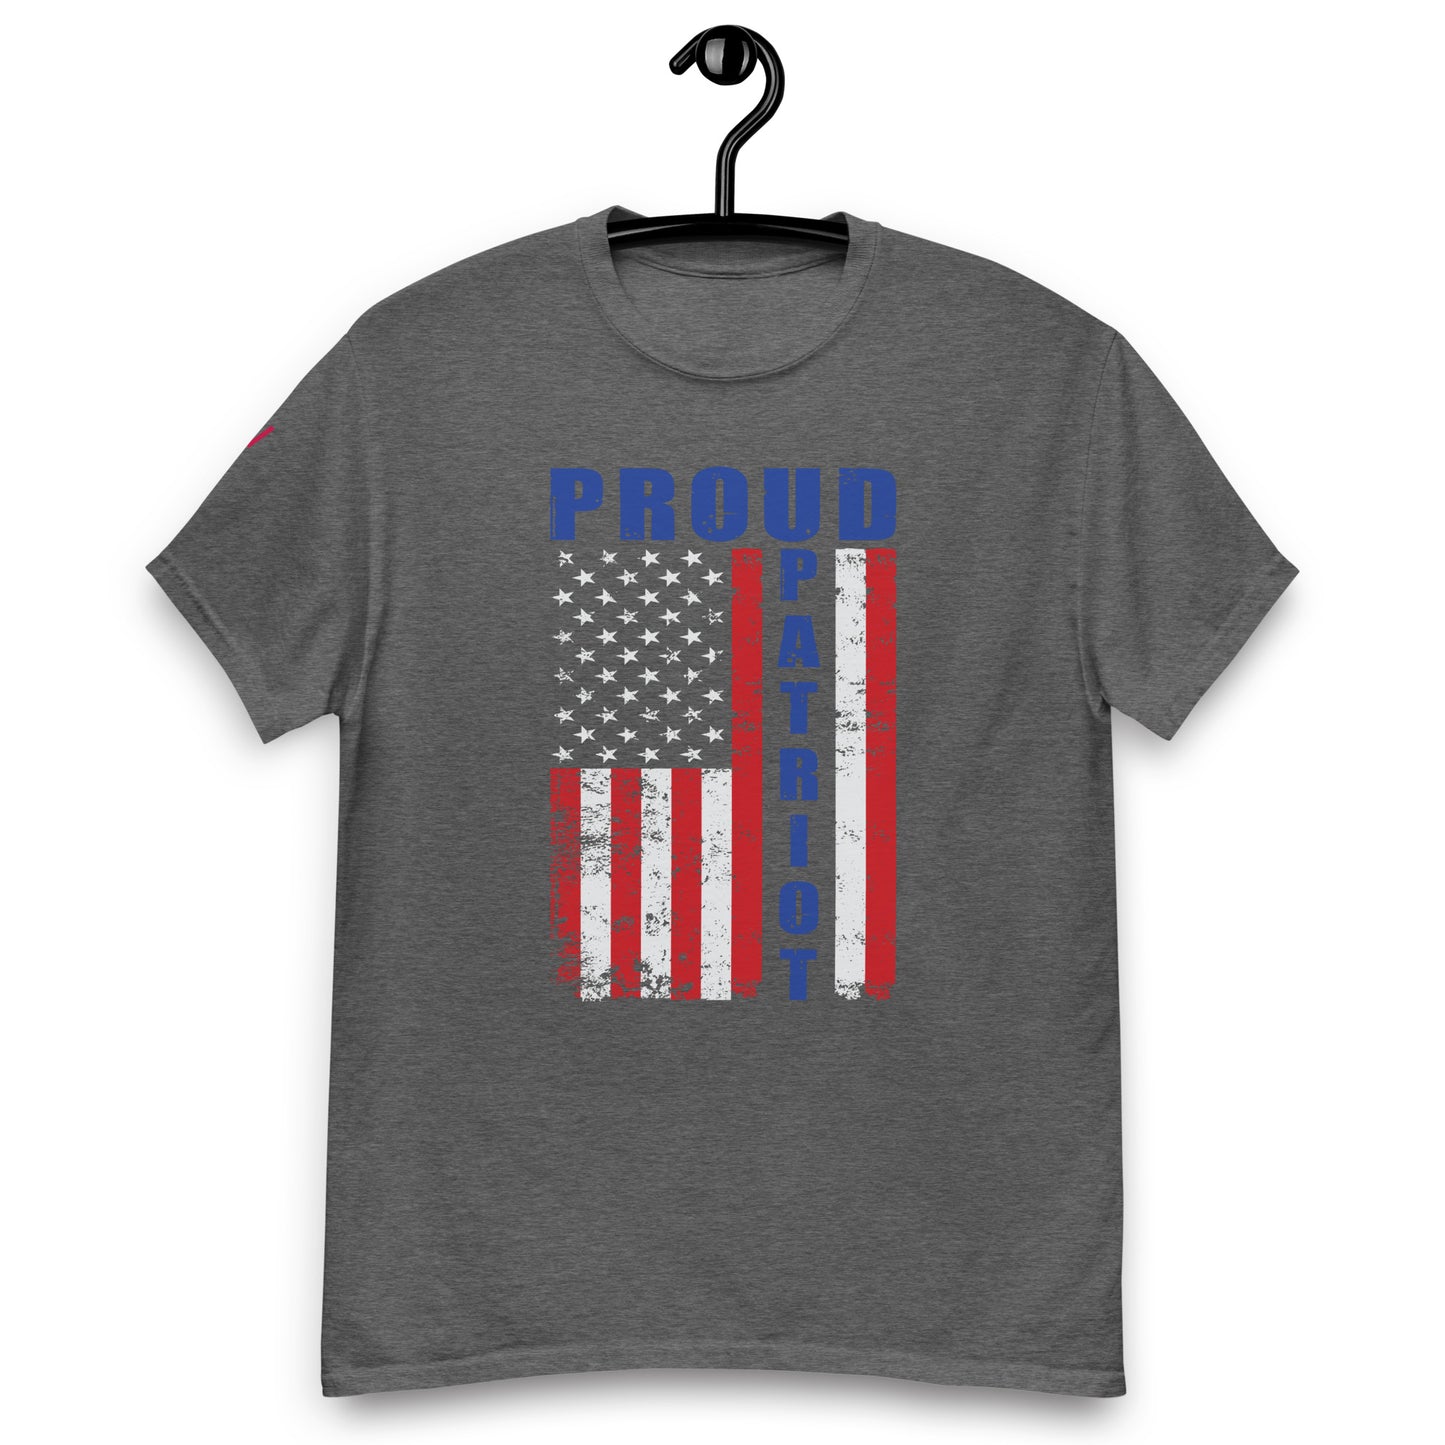 Proud Patriot Men's Shirt